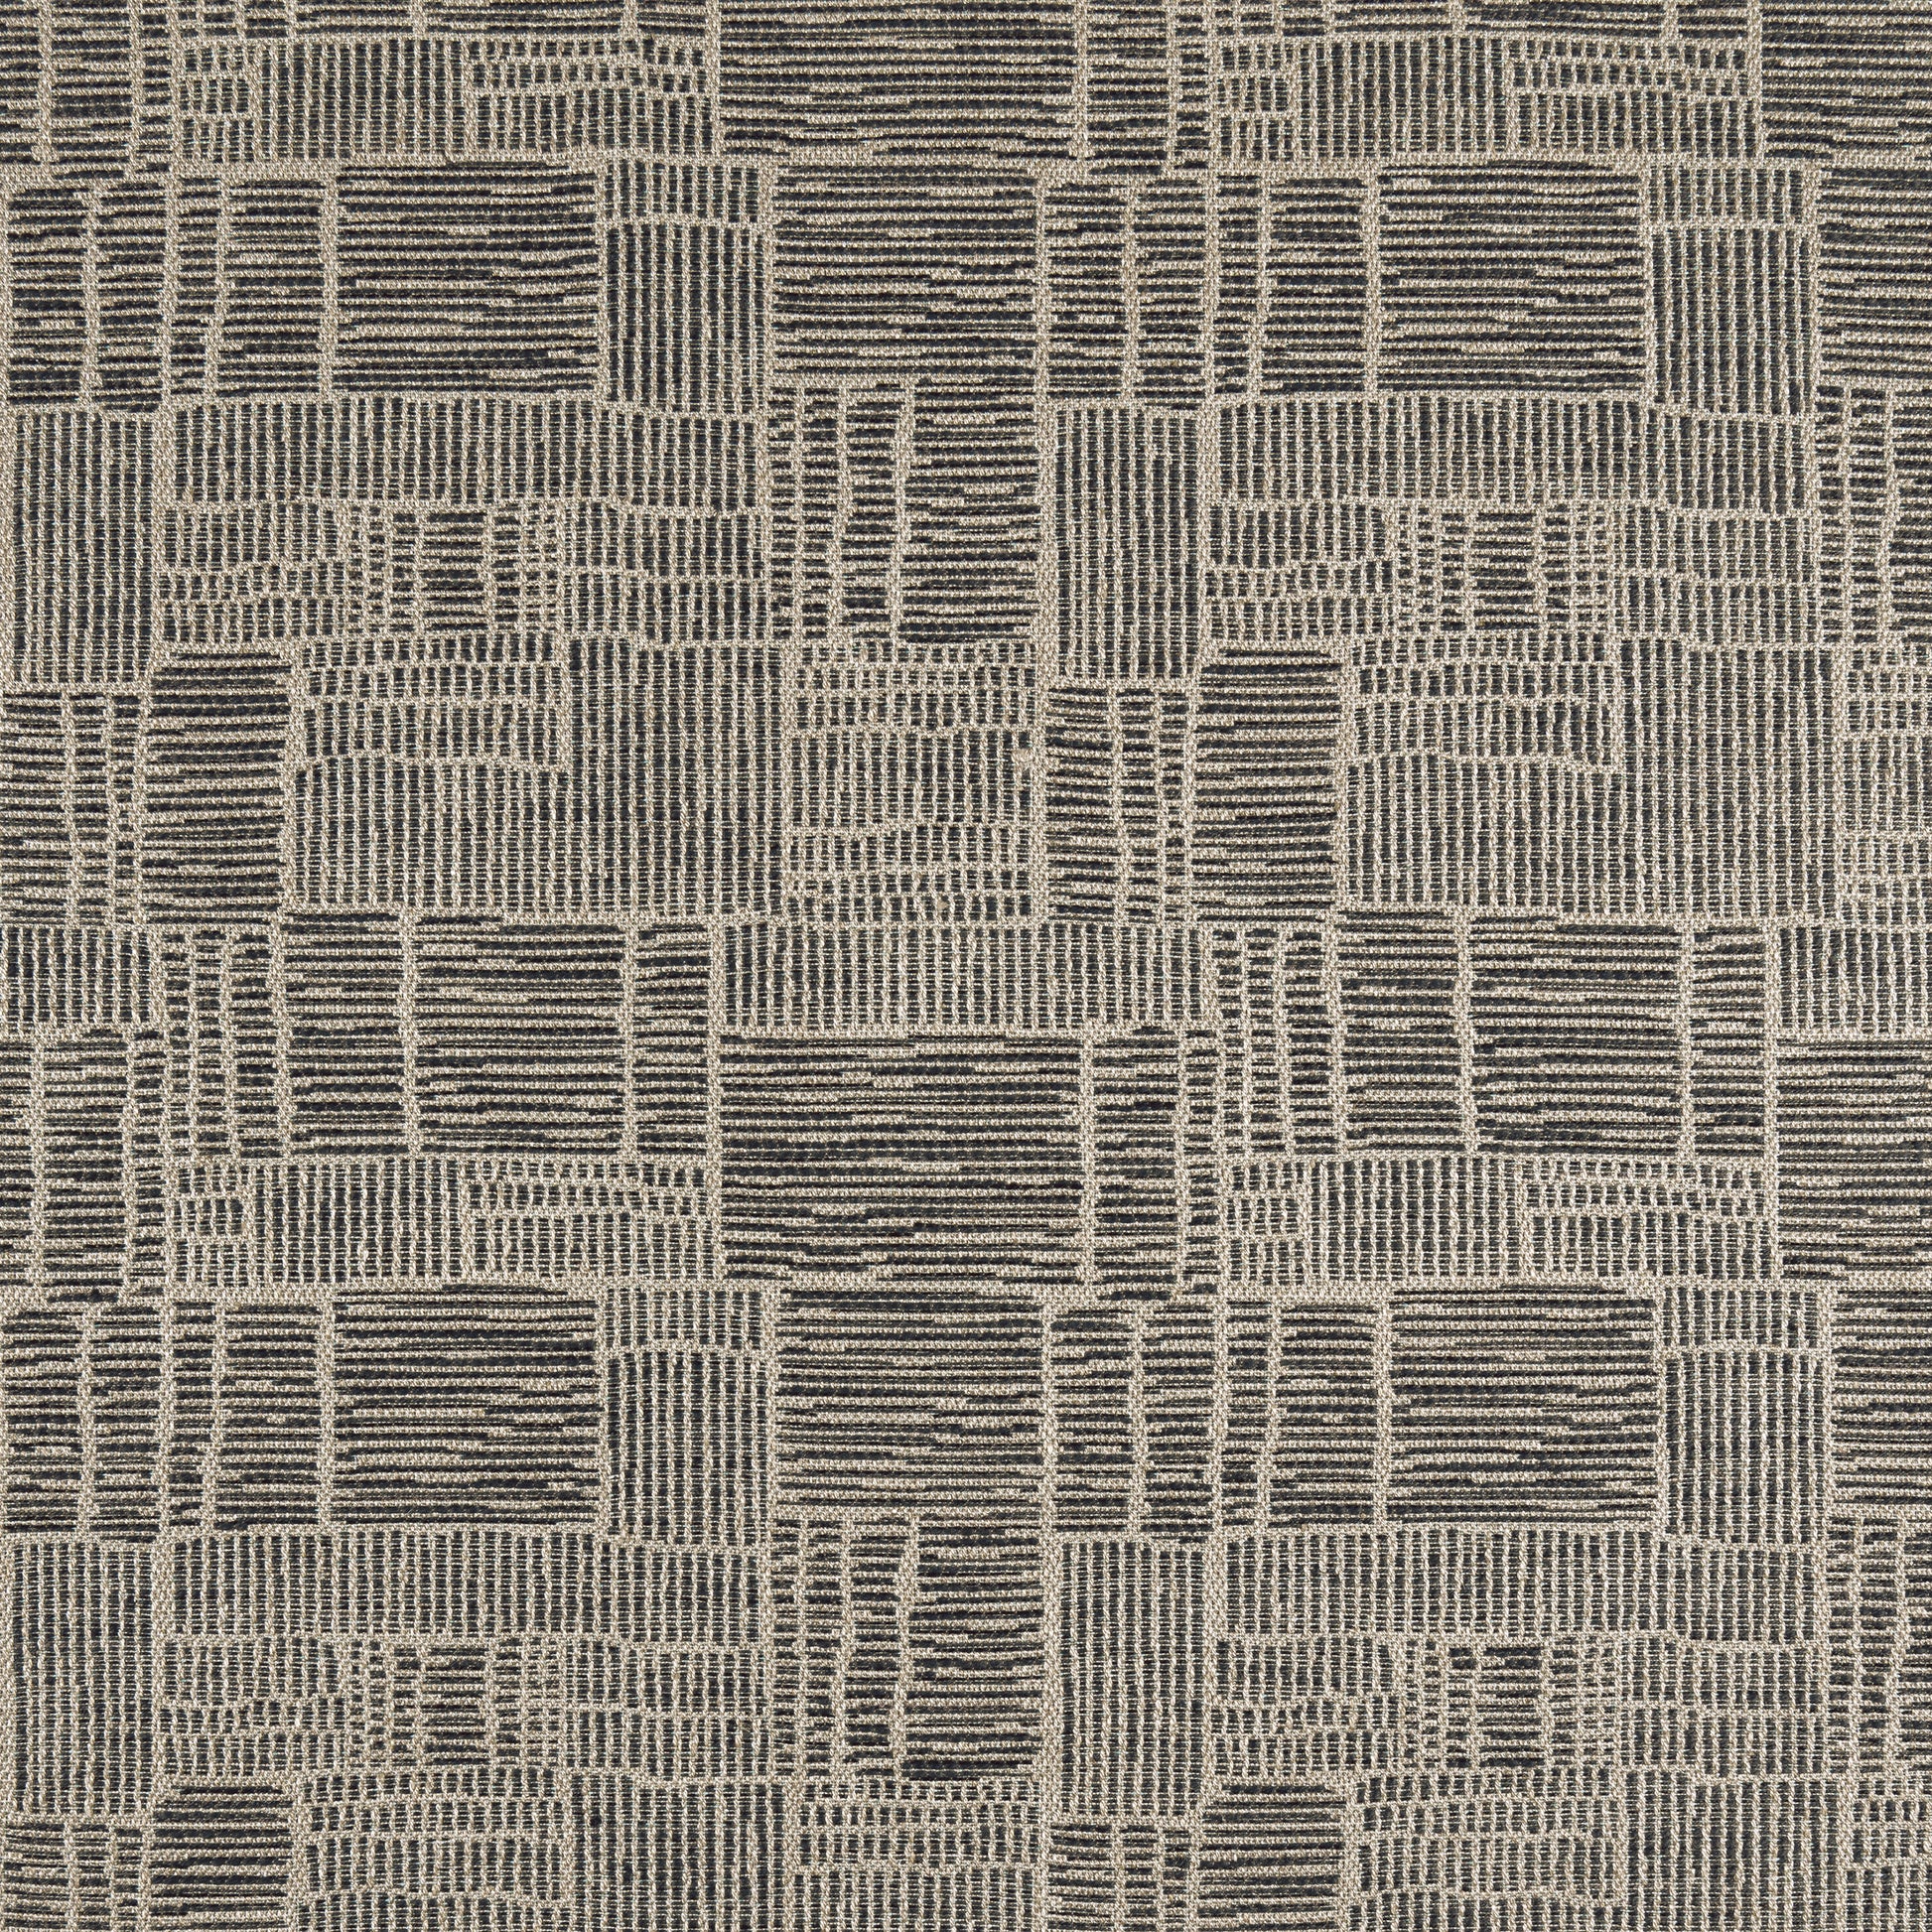 Purchase Thibaut Fabric Pattern number W8127 pattern name Vario color Smoke